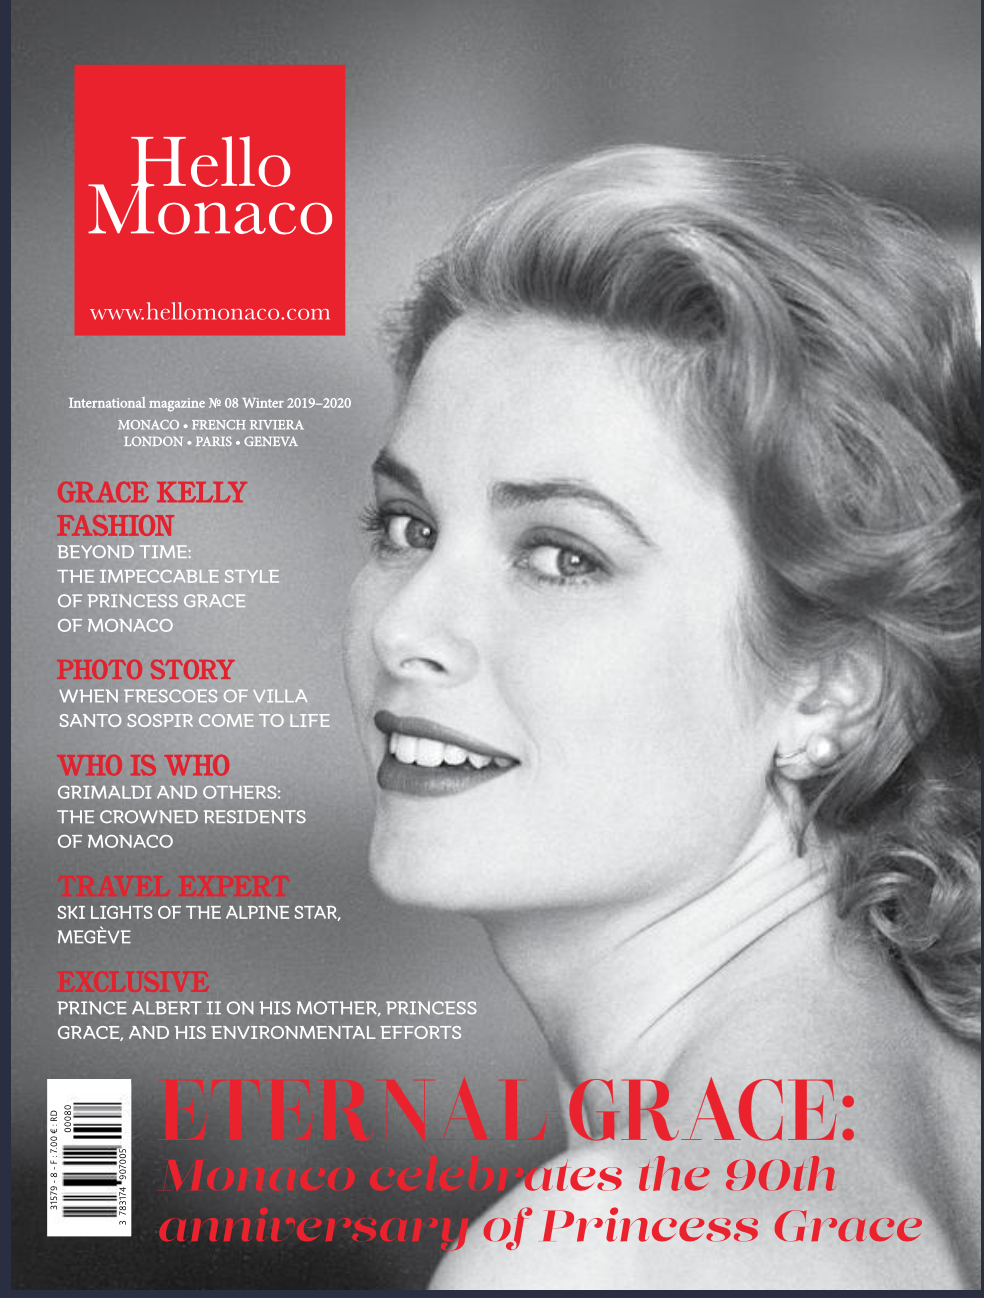 Grace Kelly, 'Rear Window' Star, Oscar Winner  and a Princess